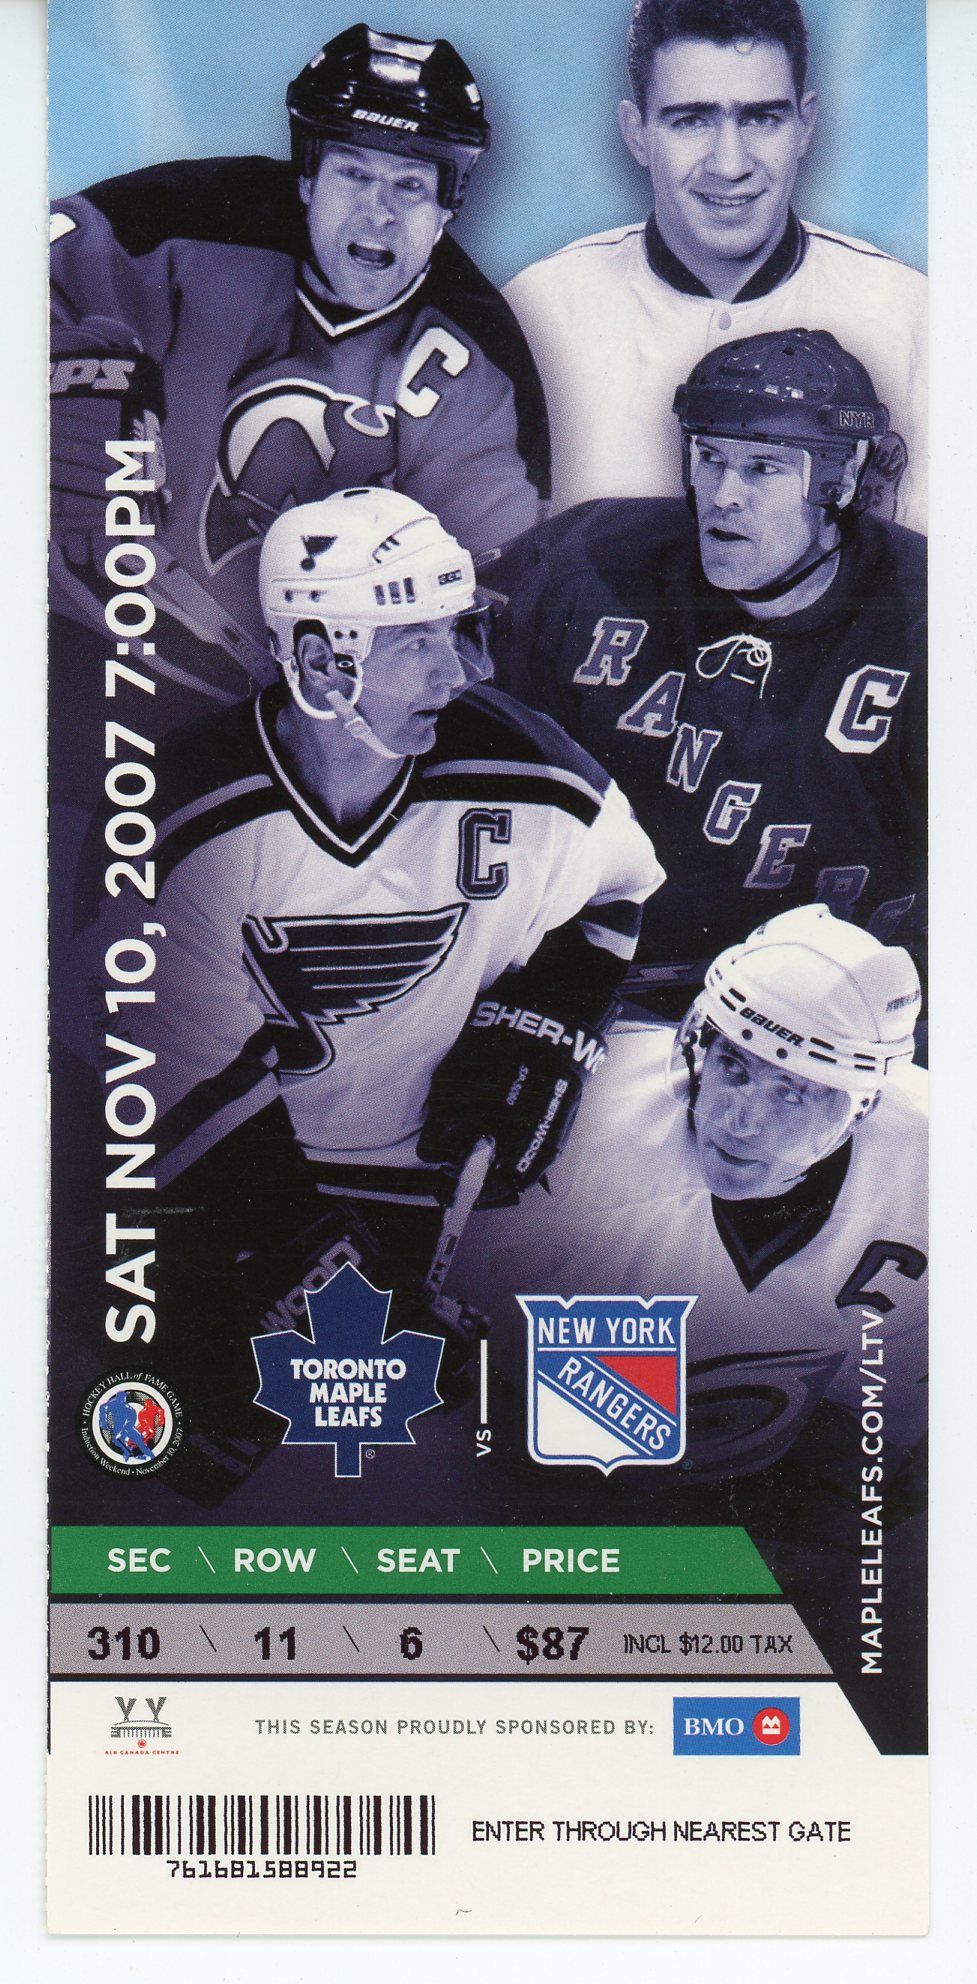 Toronto Maple Leafs vs. New York Rangers Air Canada Centre 2007